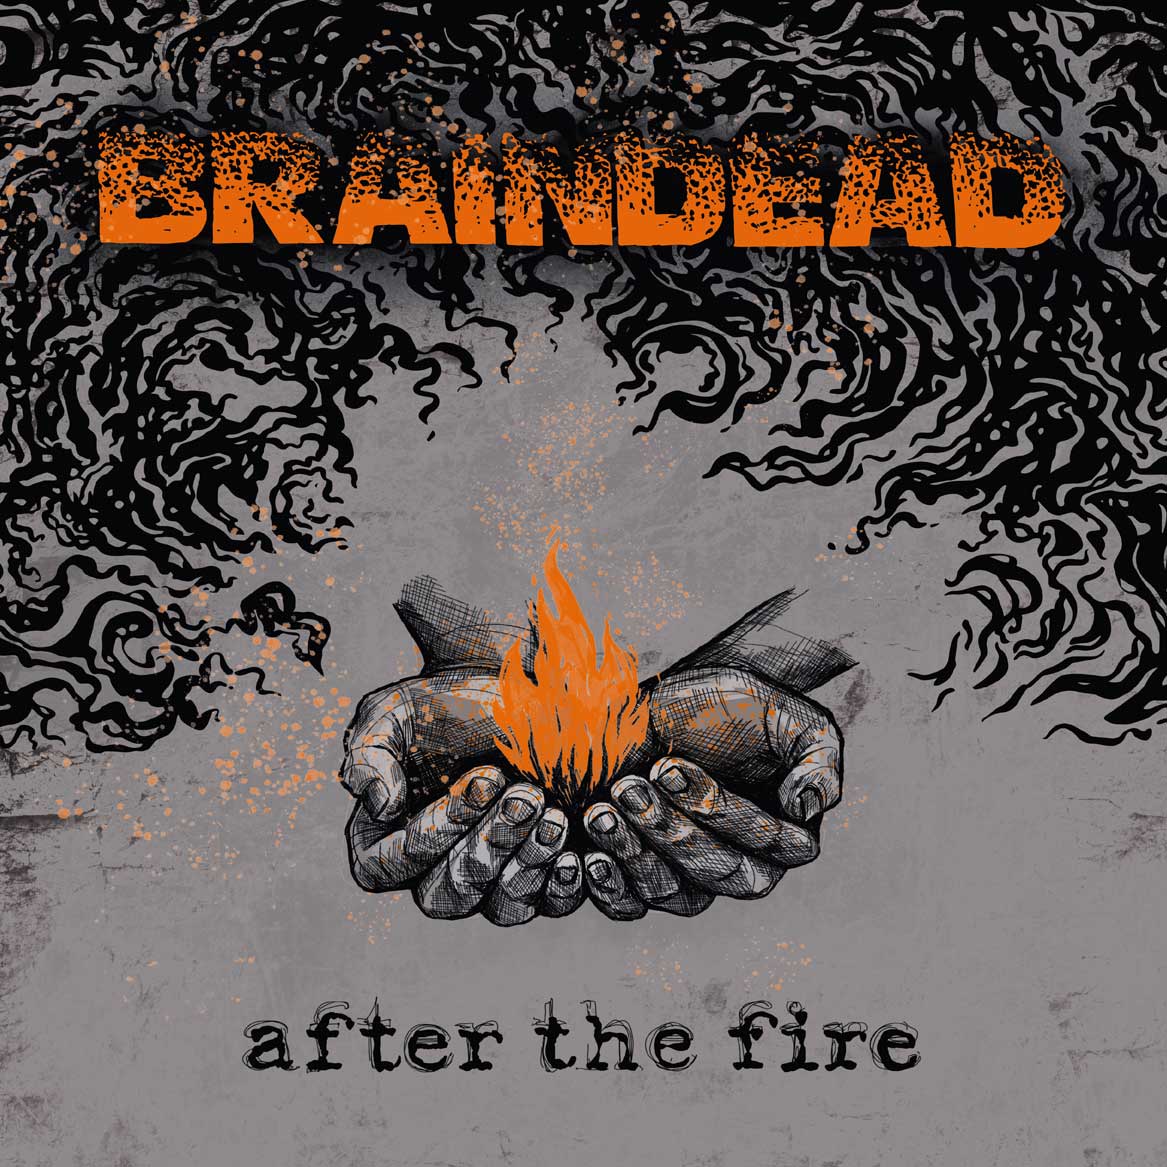 BRAINDEAD "After the fire" - LP